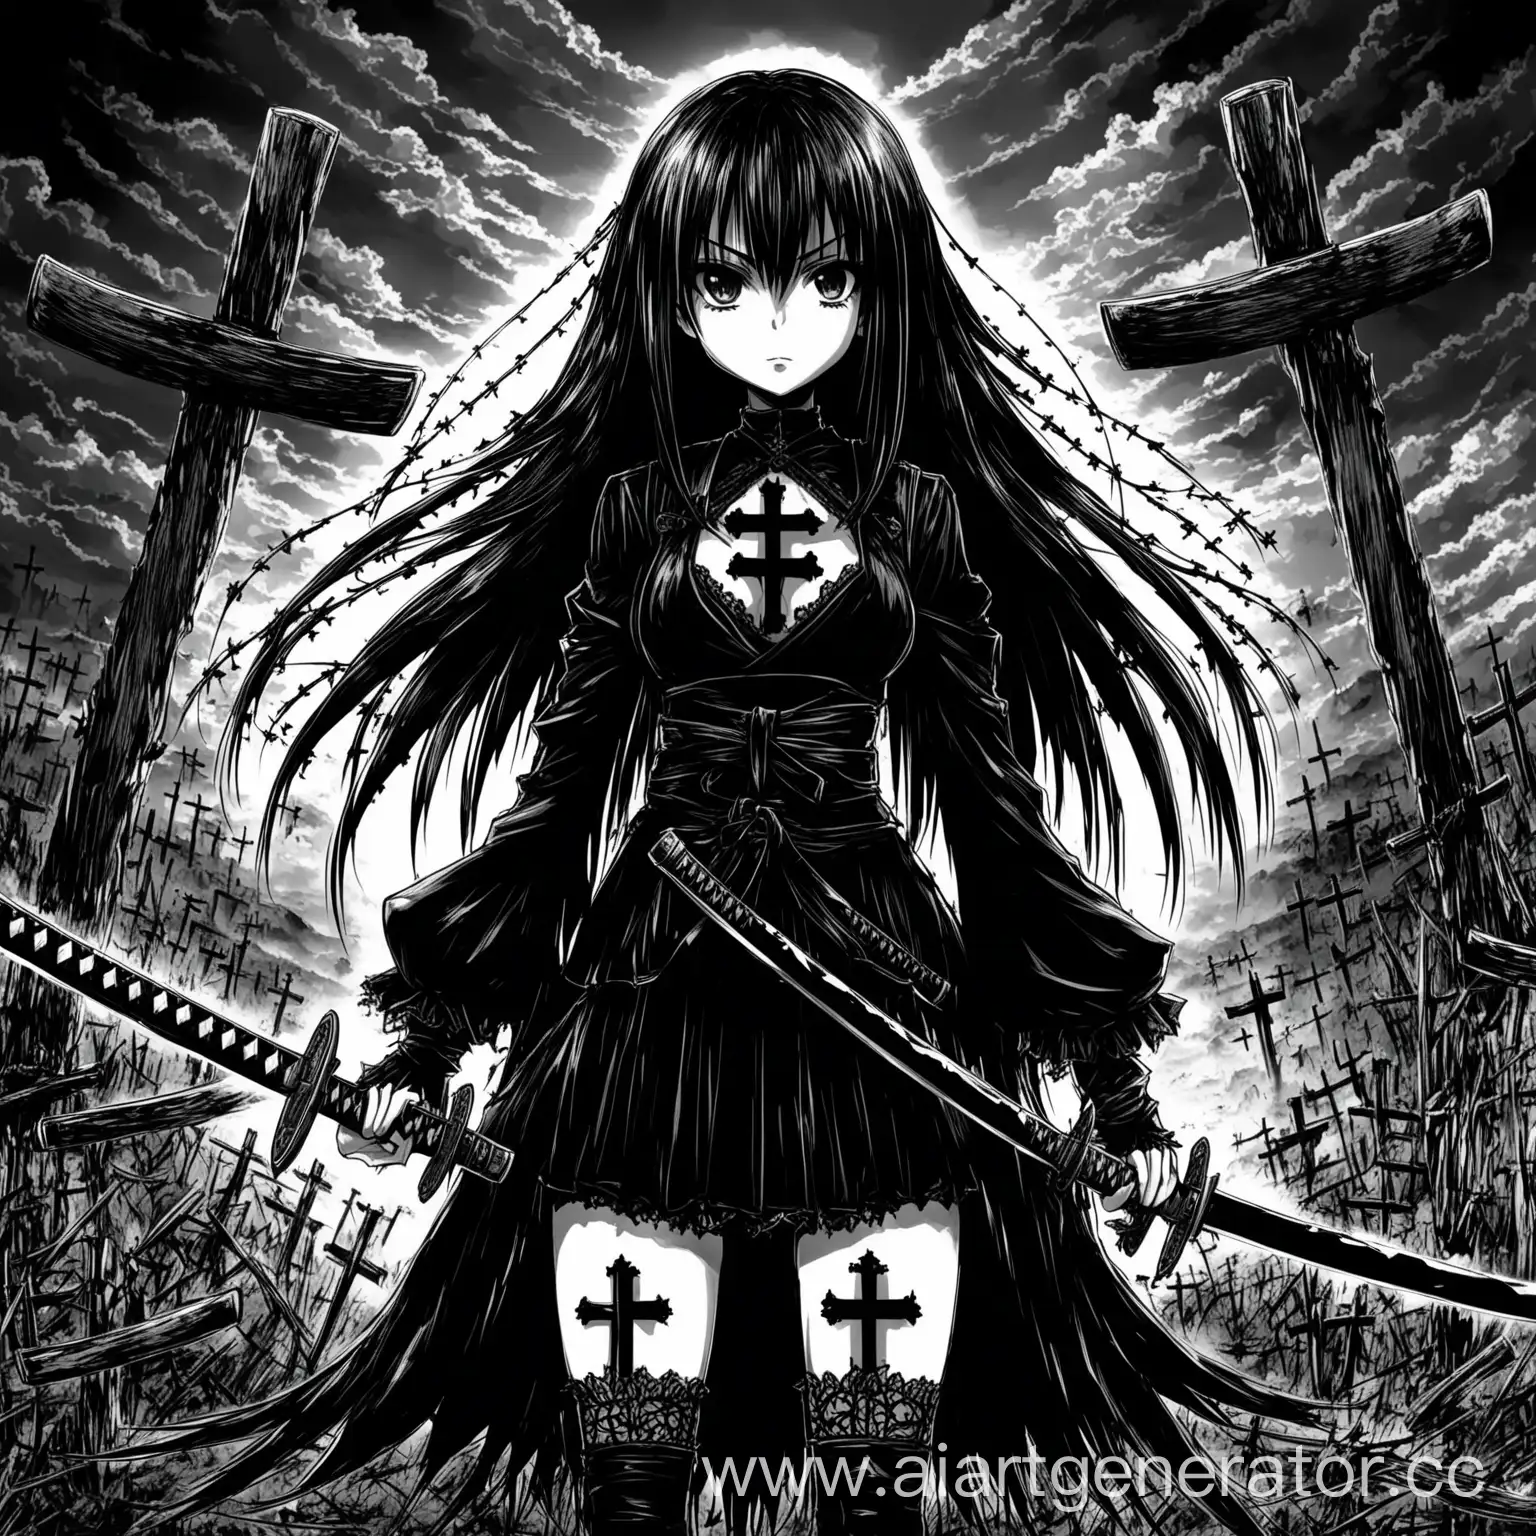 Gothic-Anime-Girls-with-Cross-and-Katana-Monochrome-Manga-Art